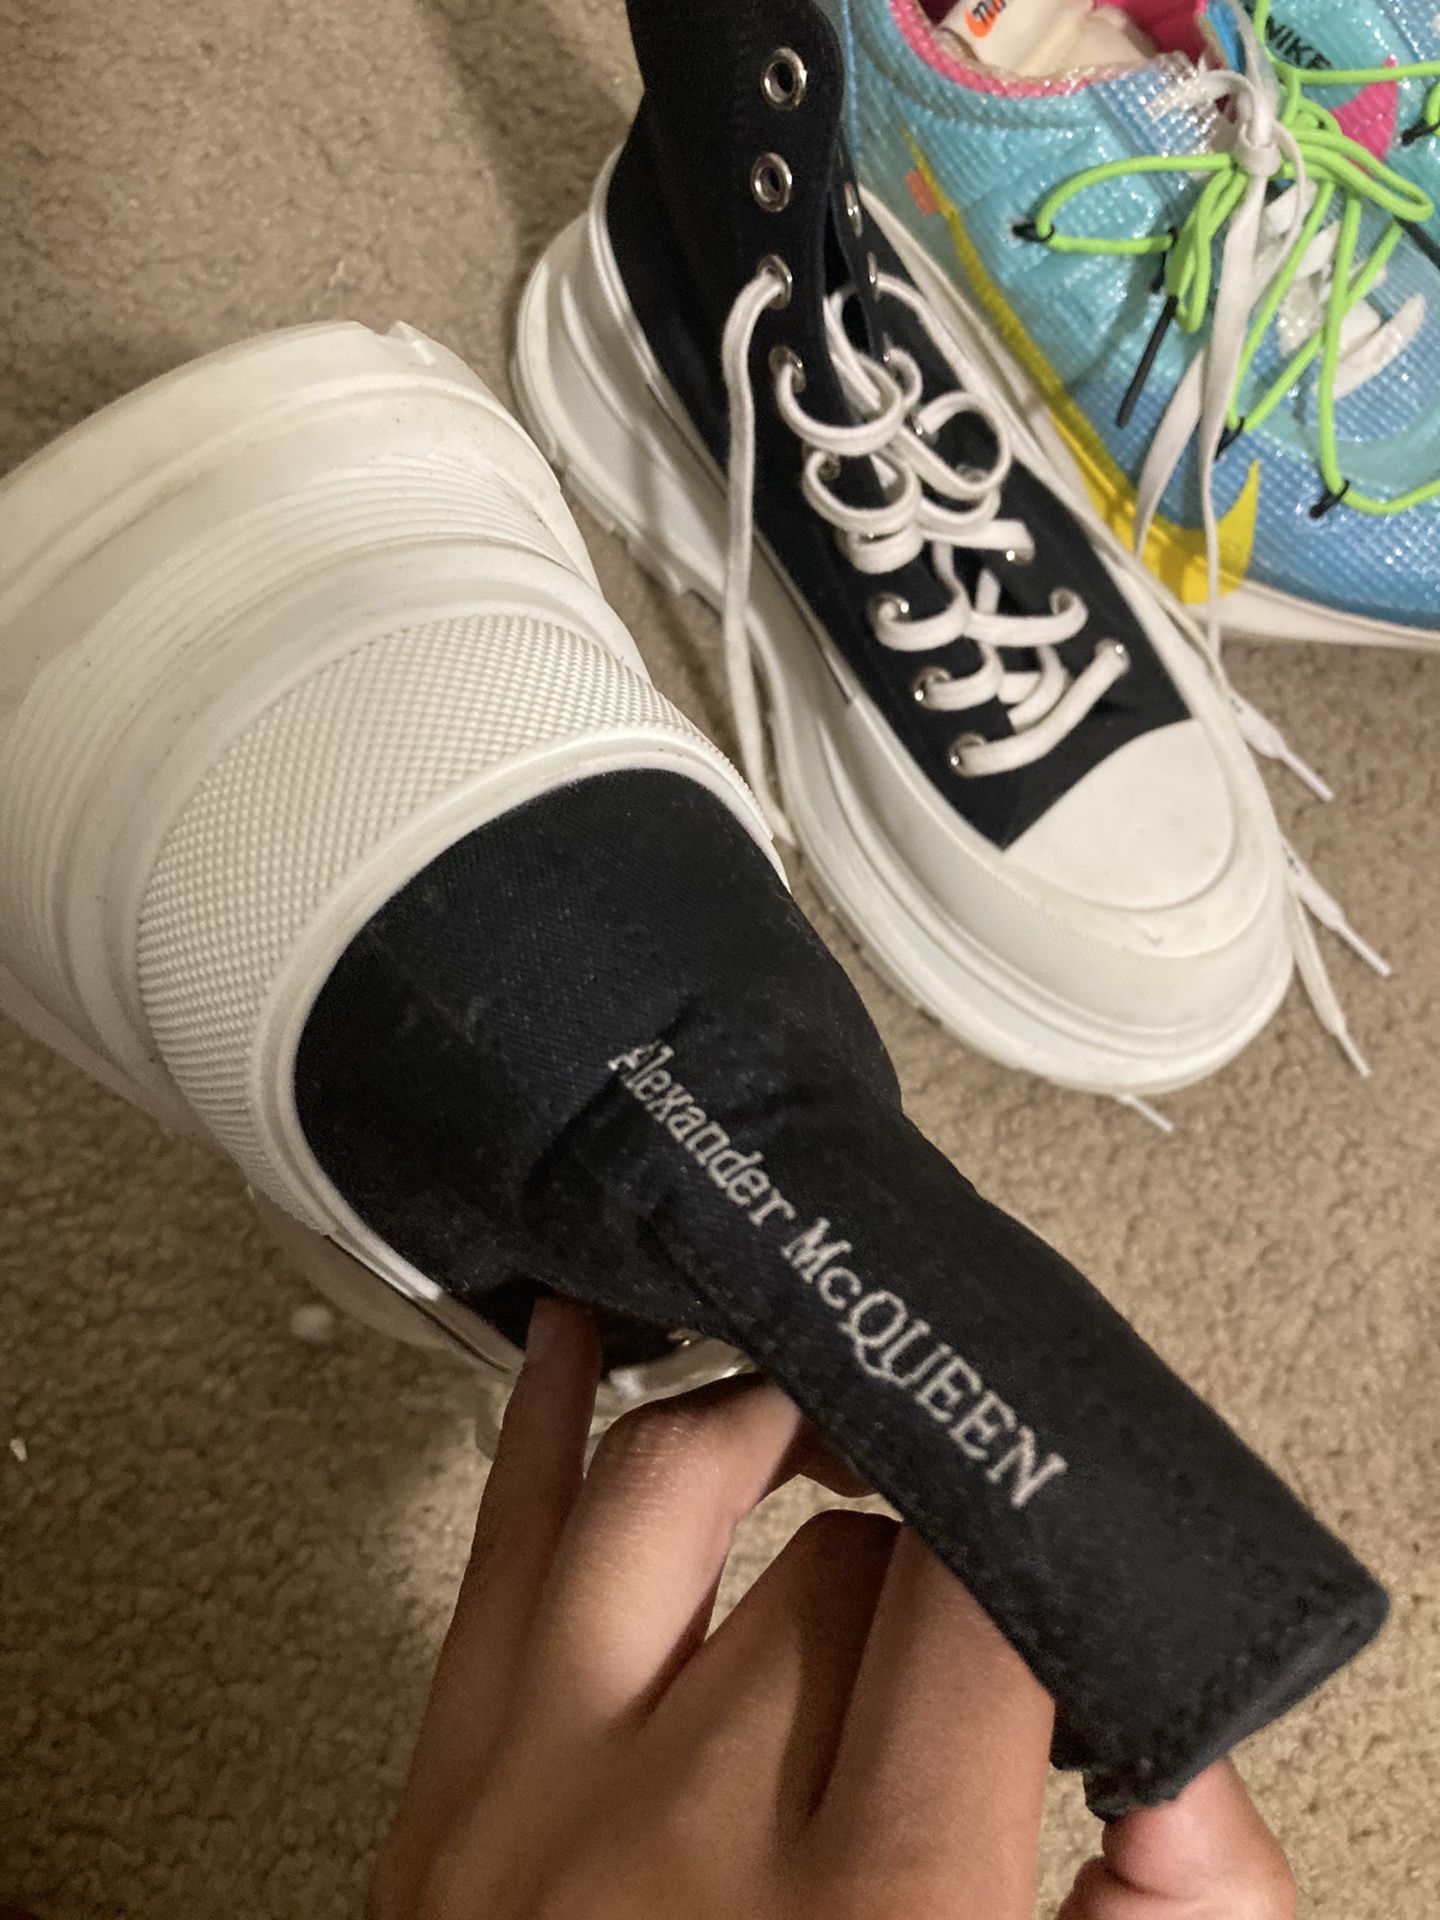 Alexander mcqueen boots & off white sneakers